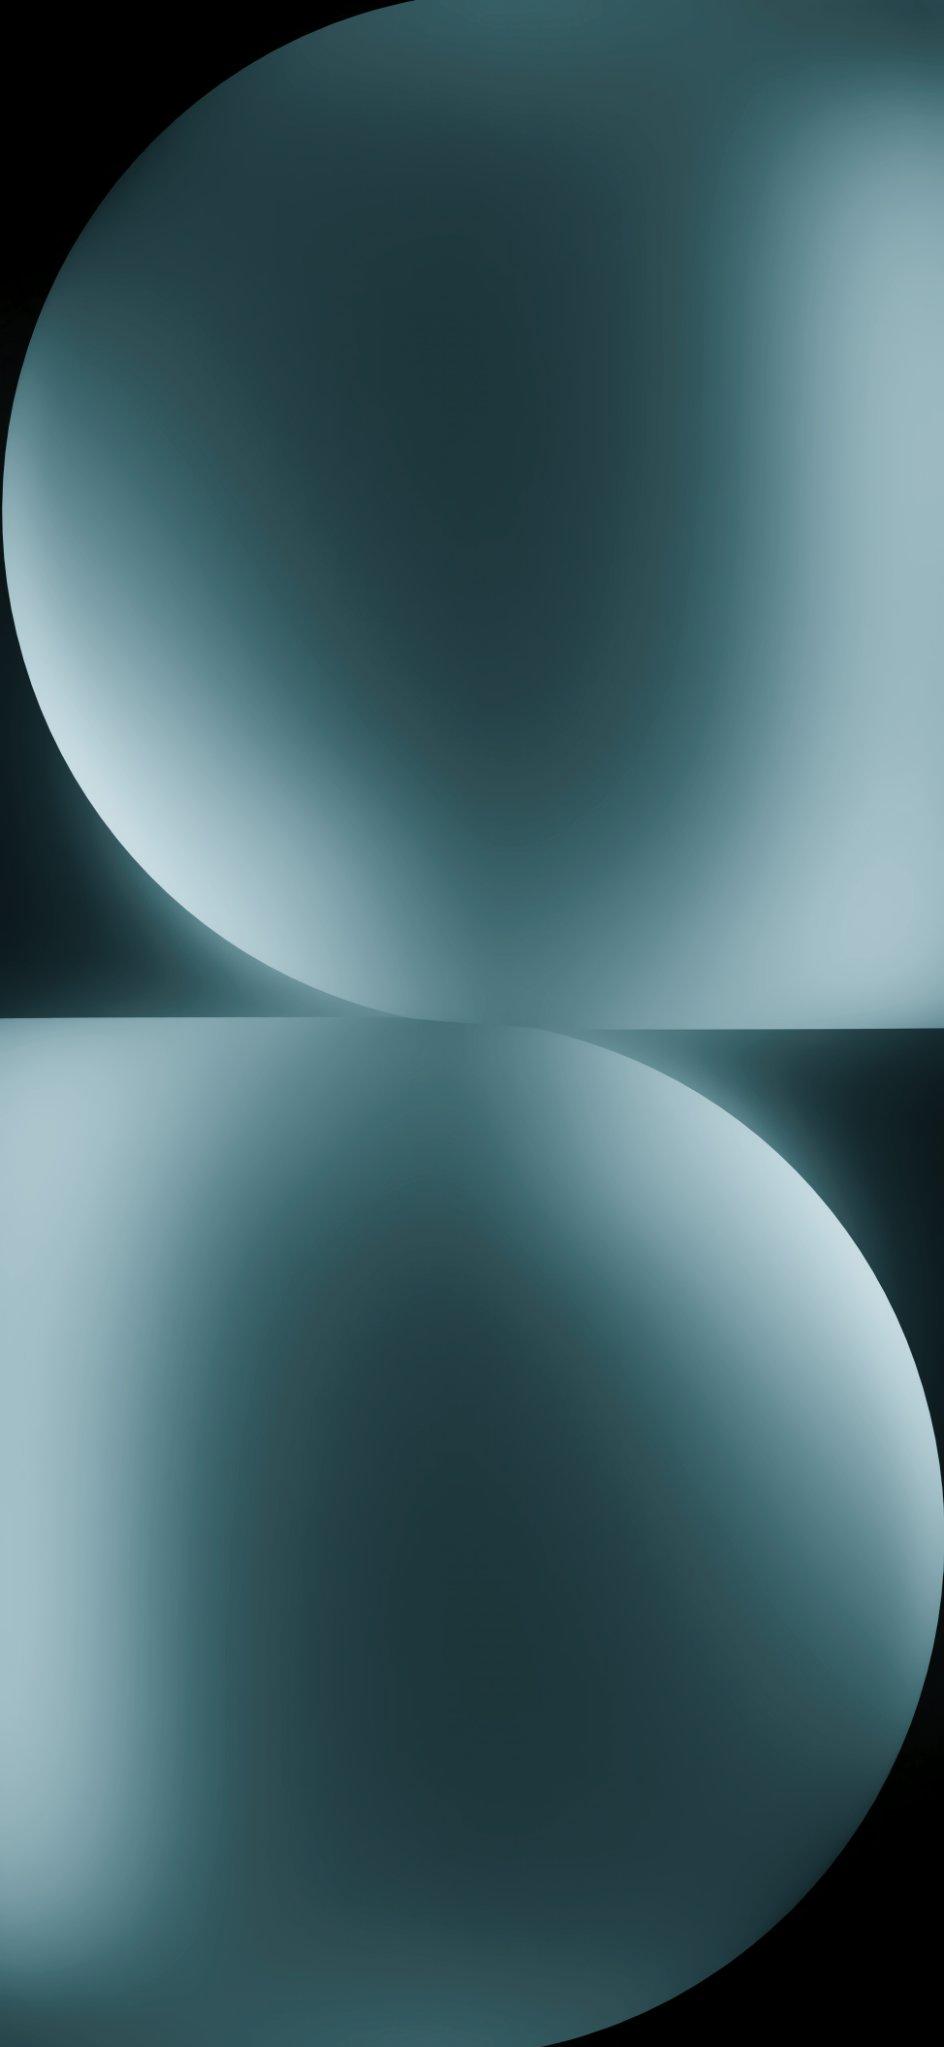 iPhone Concept Wallpaper Based On Rurmos Blue